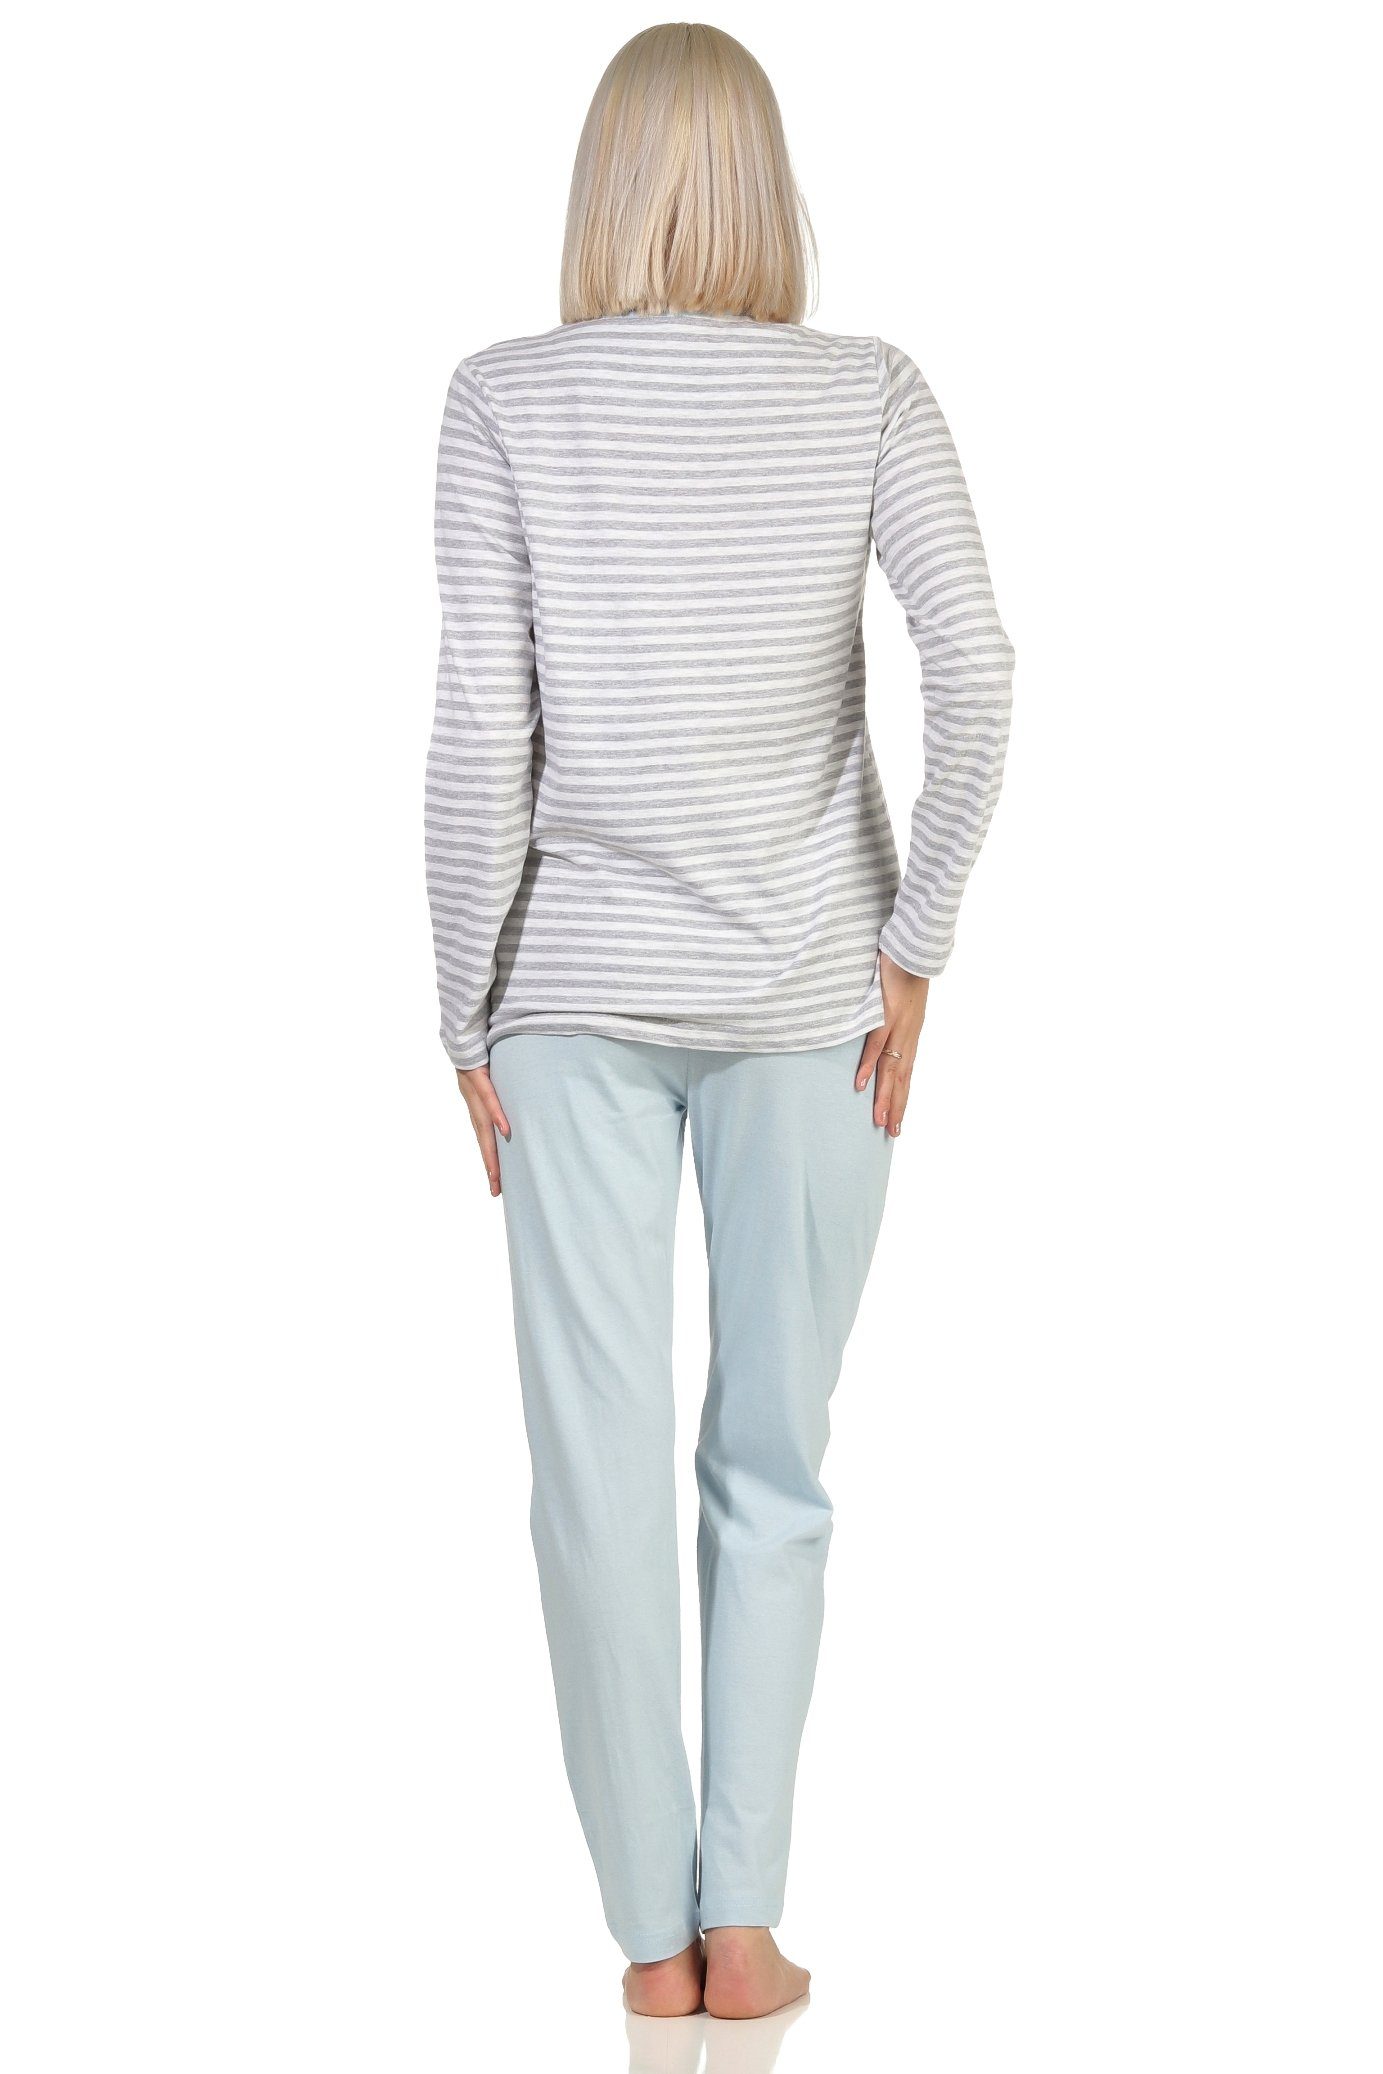 langarm Motiv Streifenoptik Pyjama Creative Schlafanzug Pyjama und Normann Stern by hellblau Damen